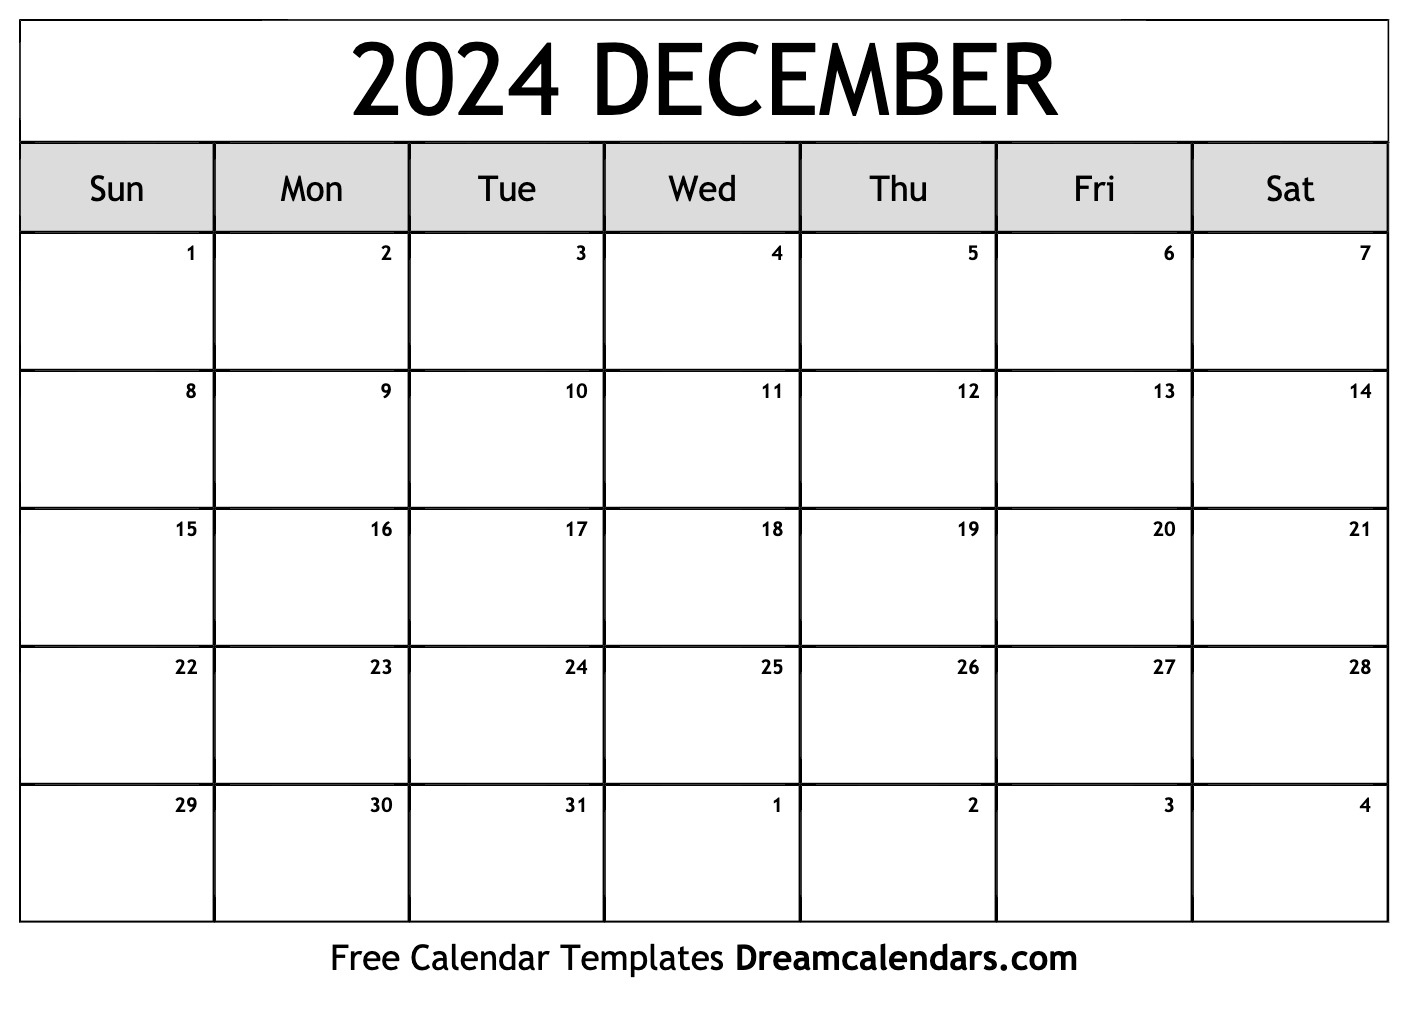 December 2024 Calendar | Free Blank Printable With Holidays within Free Printable Appointment Calendar December 2024